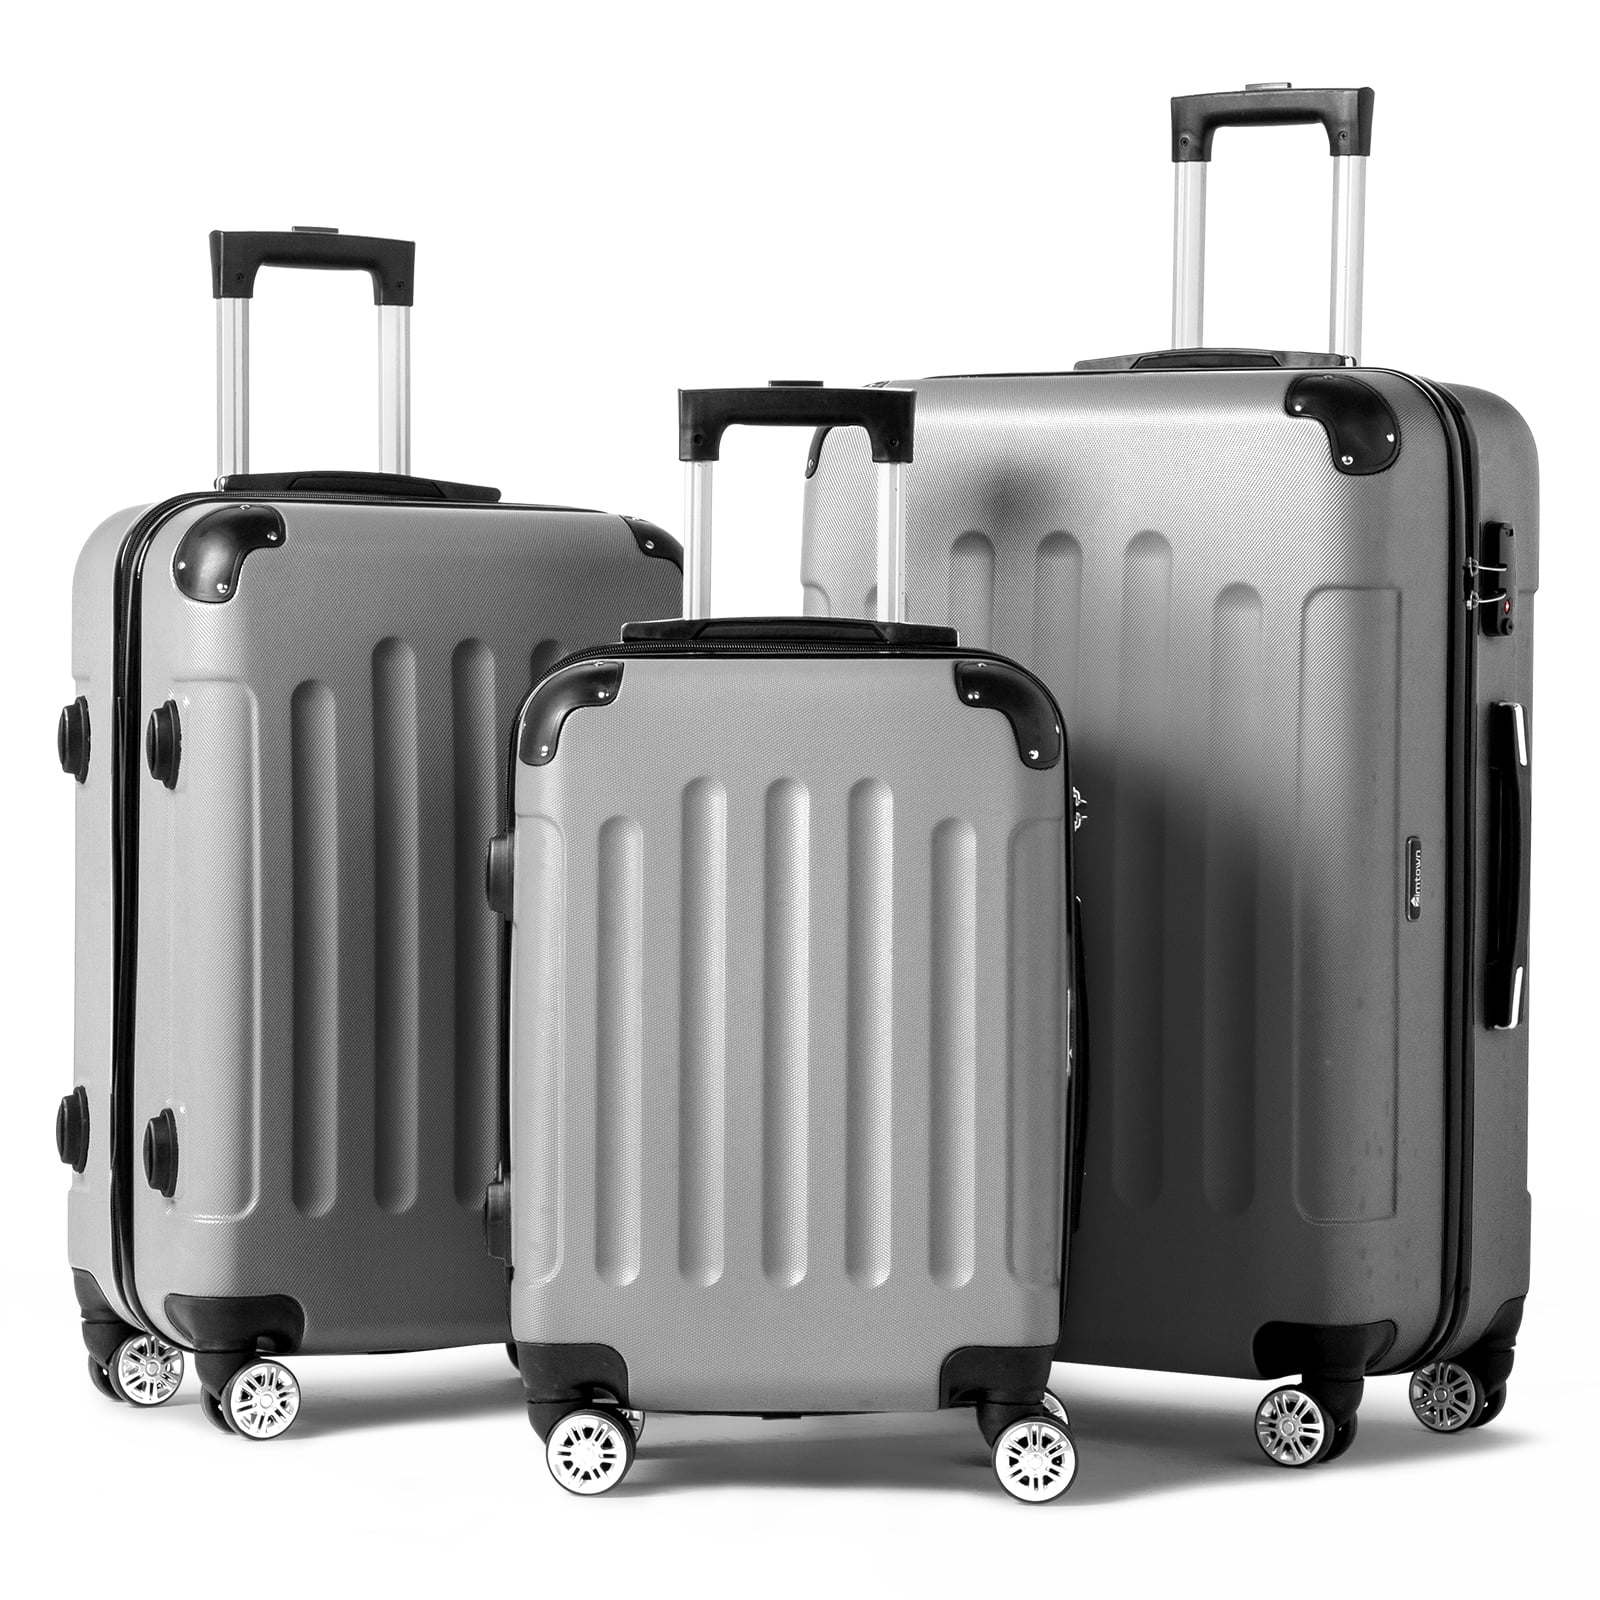 Zimtown 3 Piece Hardside Lightweight Spinner Luggage Set with TSA Lock